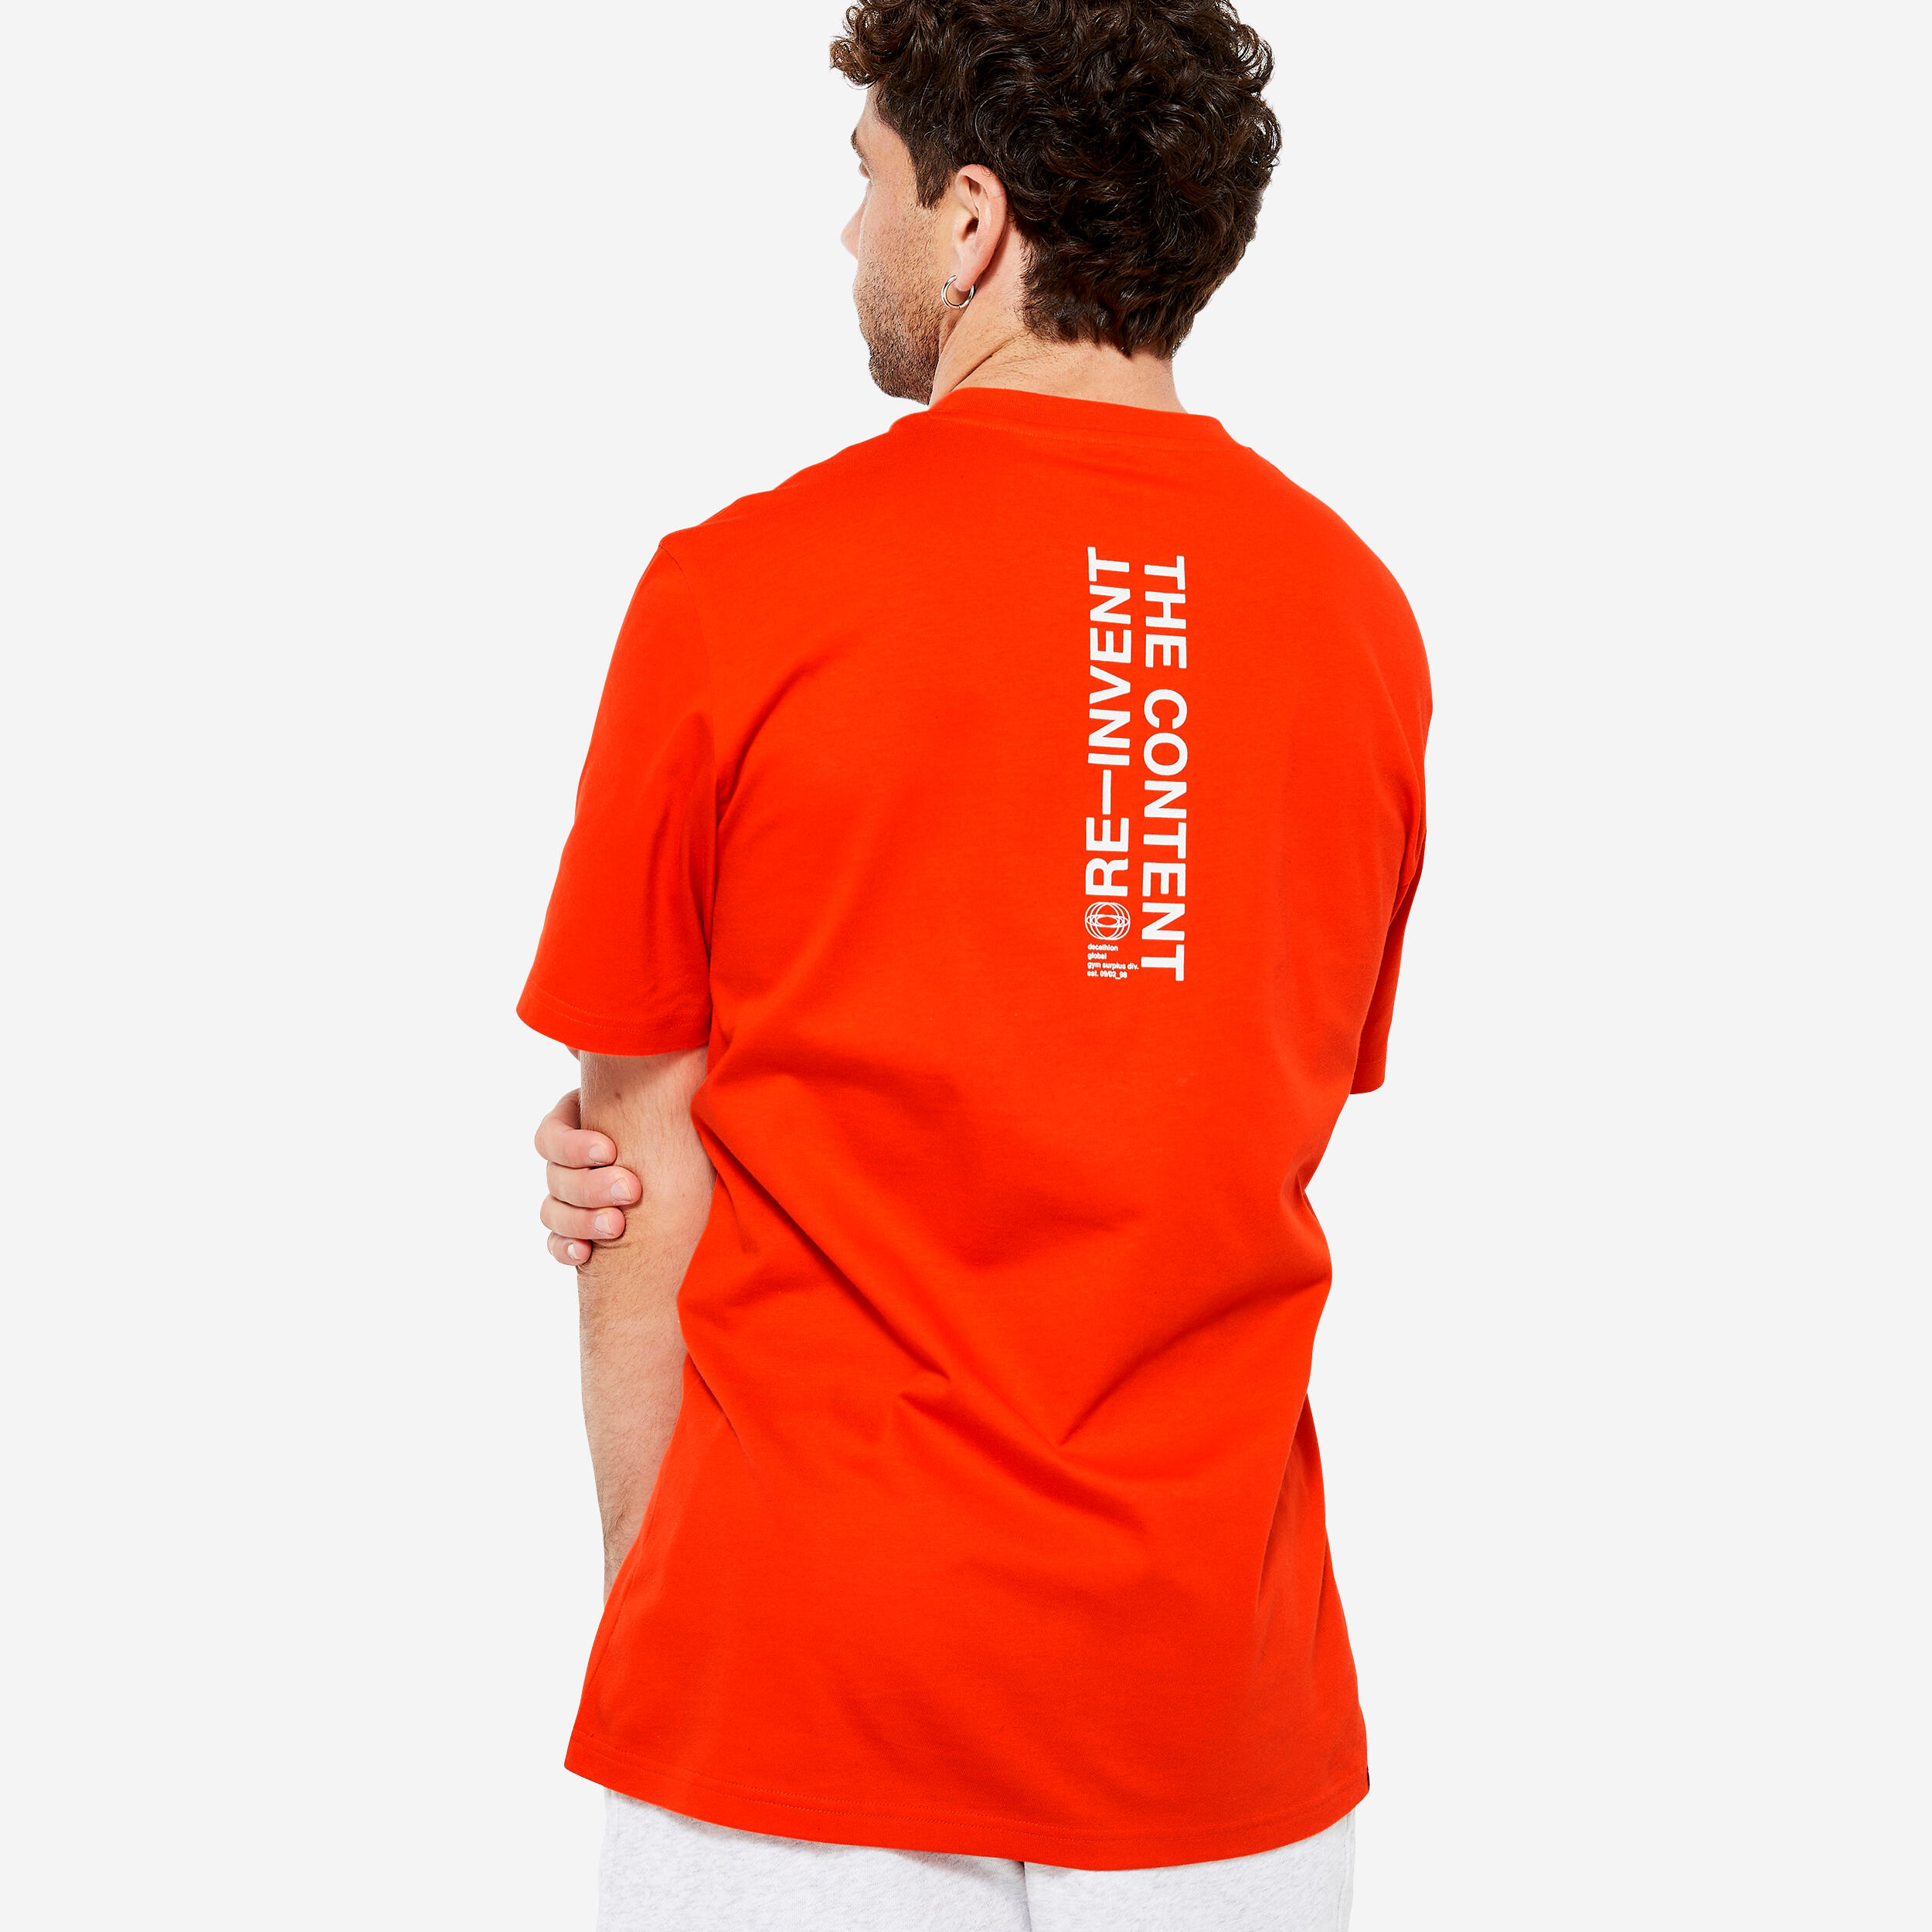 Men's Fitness T-Shirt 500 Essentials - Red Print 5/6